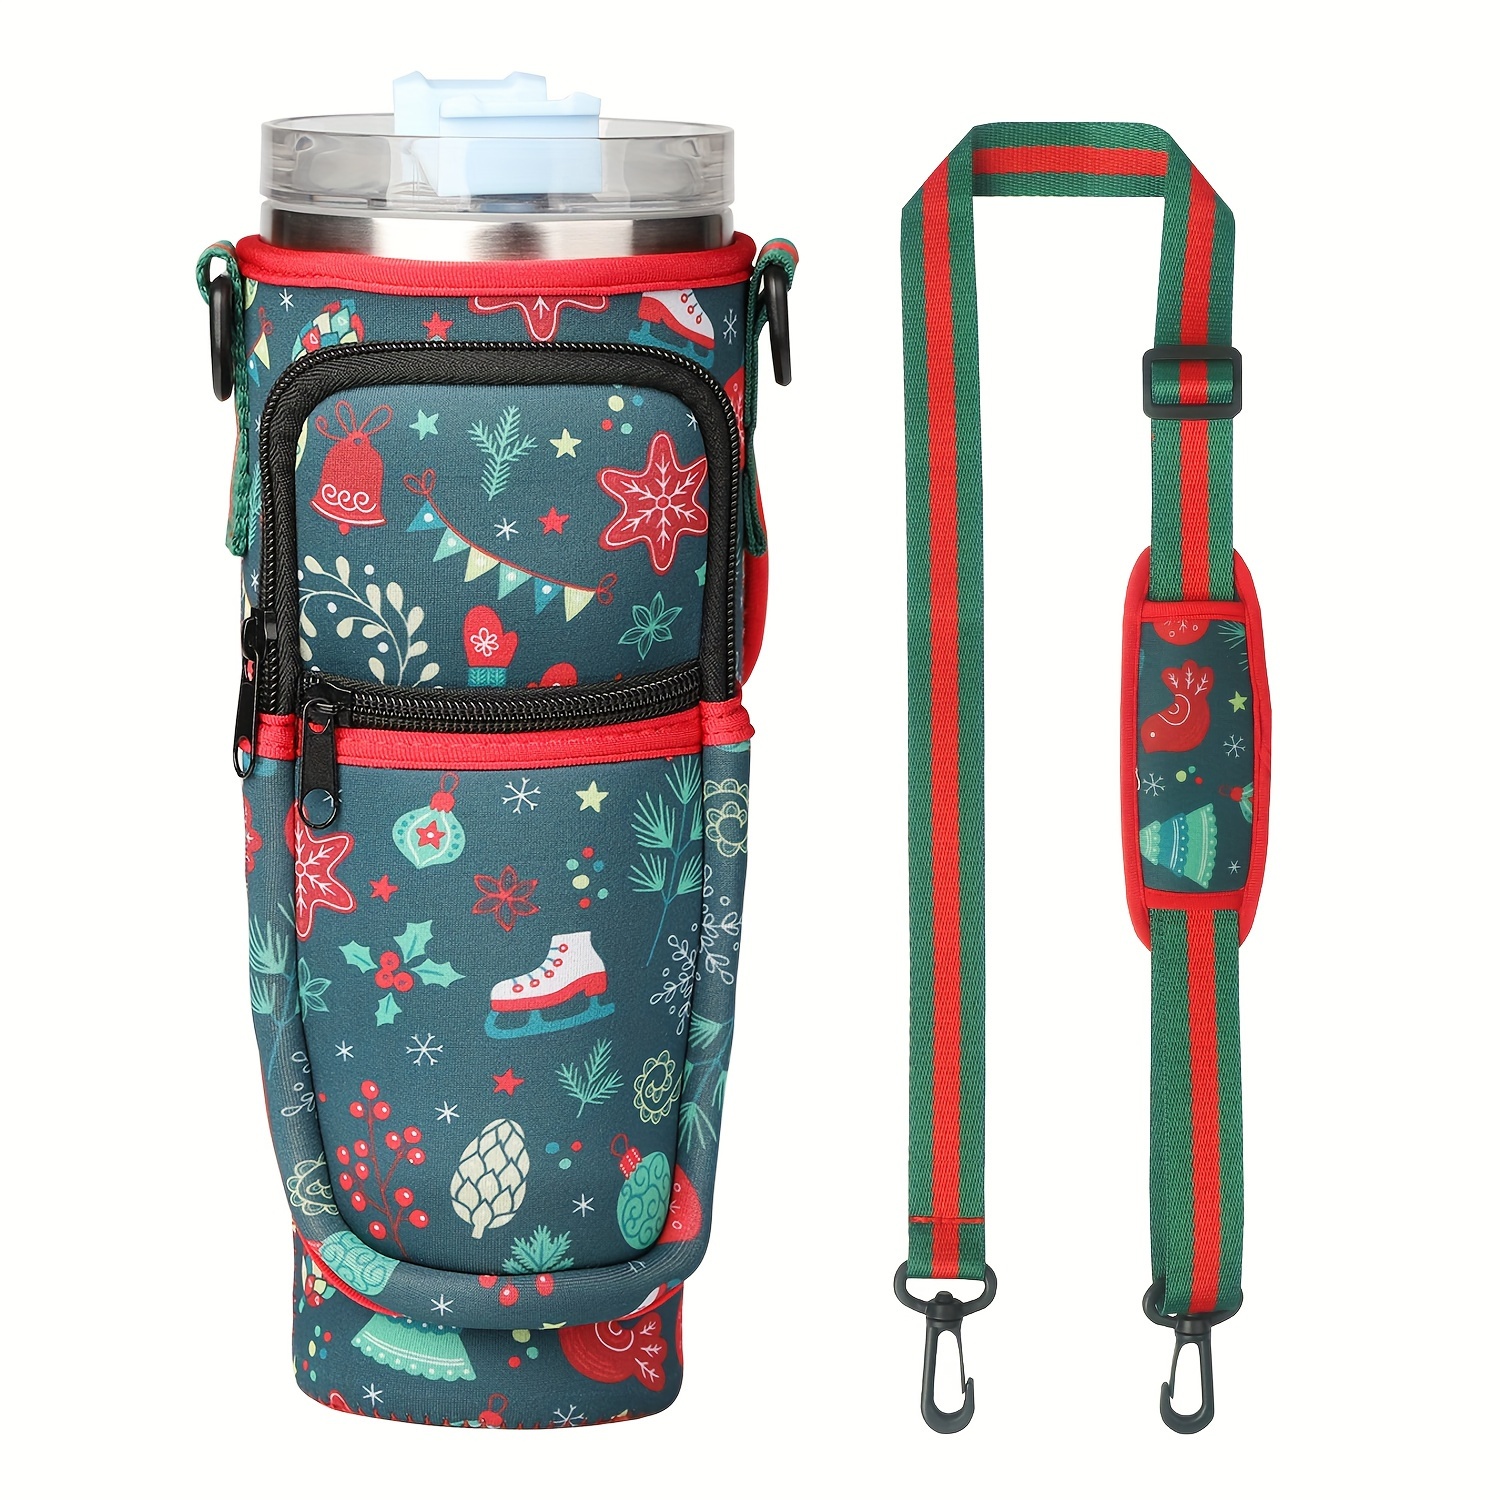 Adjustable Shoulder Strap Carrier Bag for Stanley 40oz Tumbler Water Bottle  - Portable Outdoor Bottle Holder with Fabric Cup Cover 